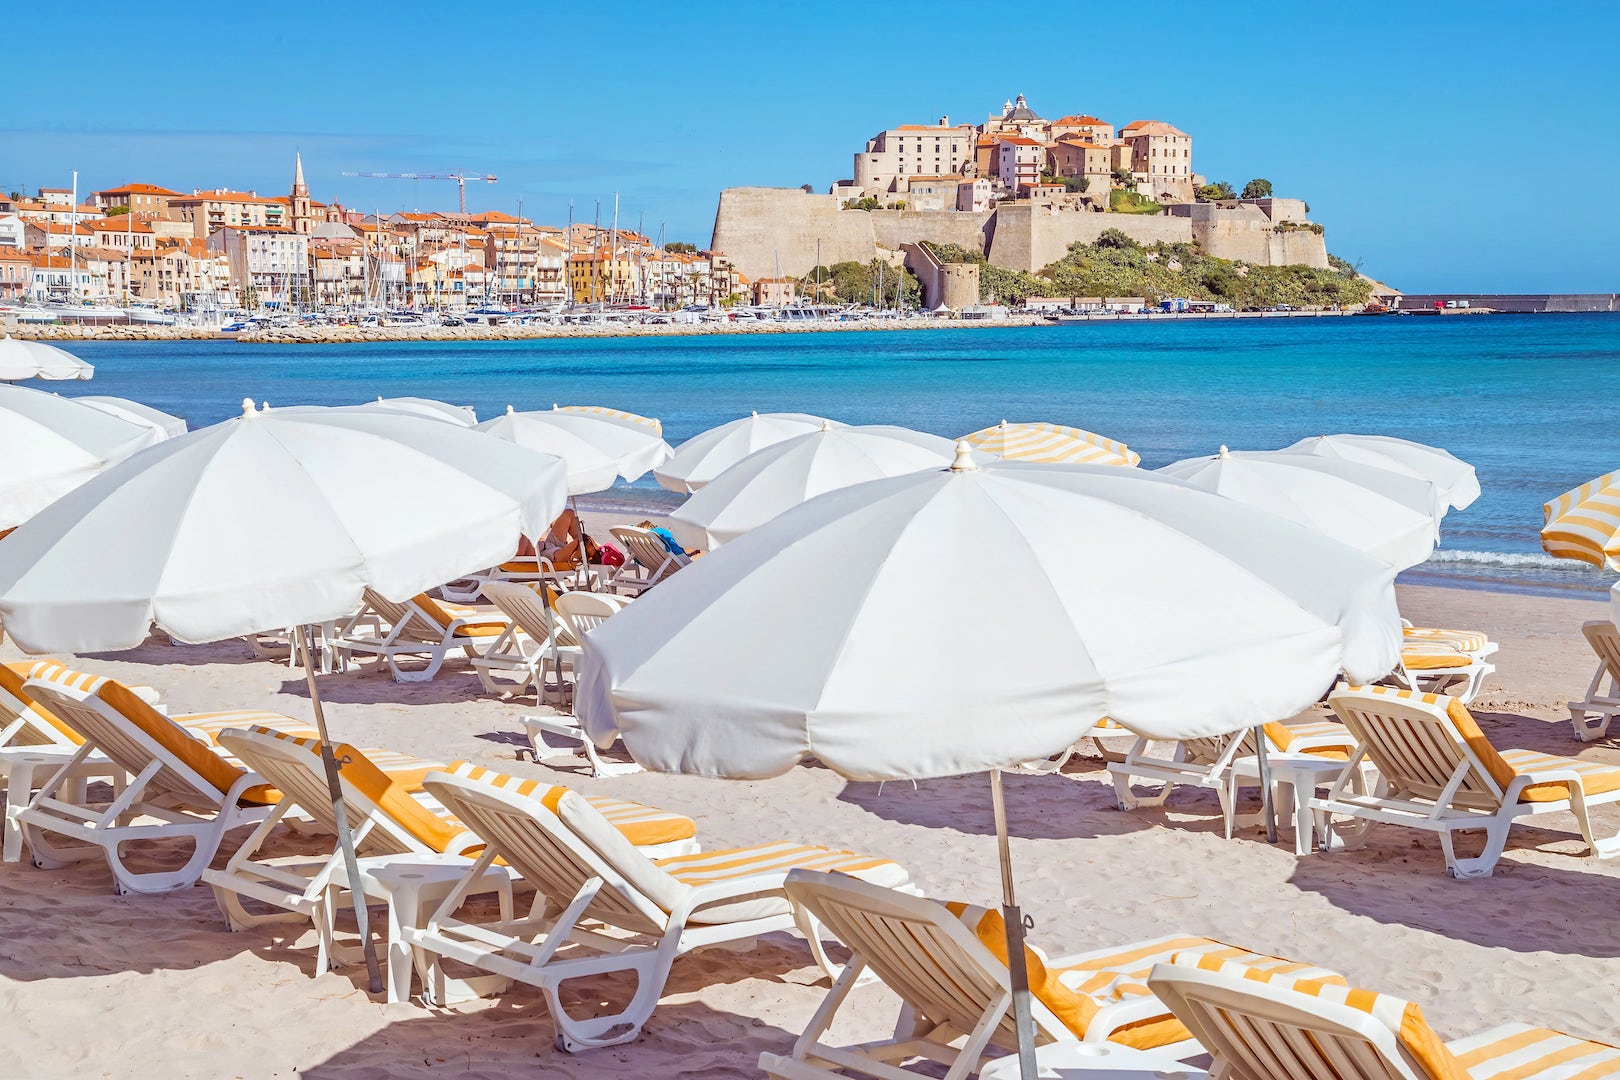 Parasols on the sandy beach of Calvi in Corsica